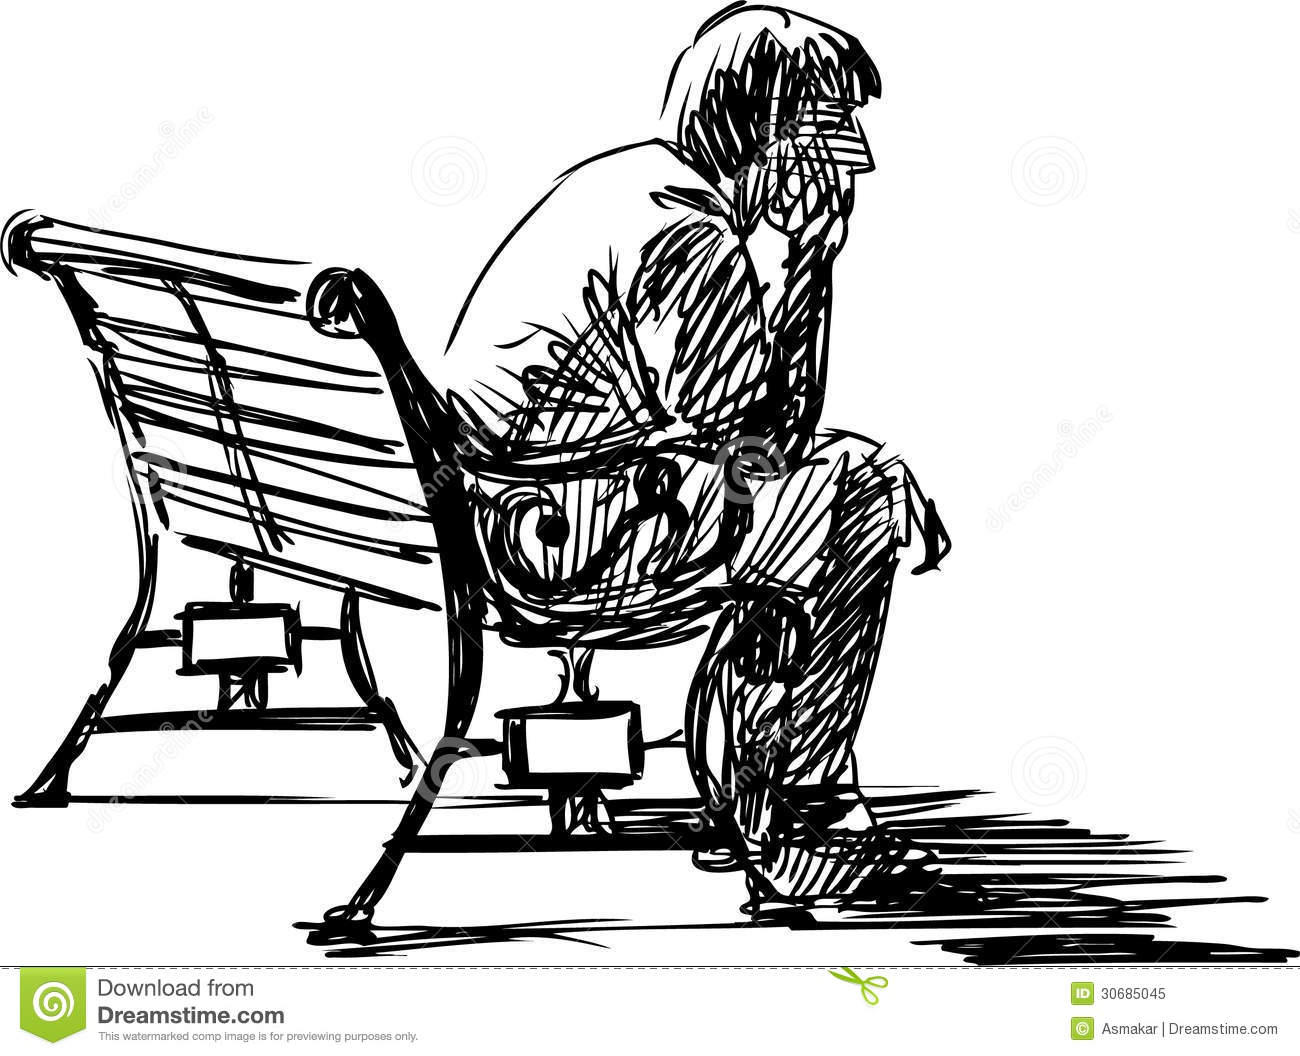 waiting-vector-sketch-young-man-sitting-bench-30685045.jpg